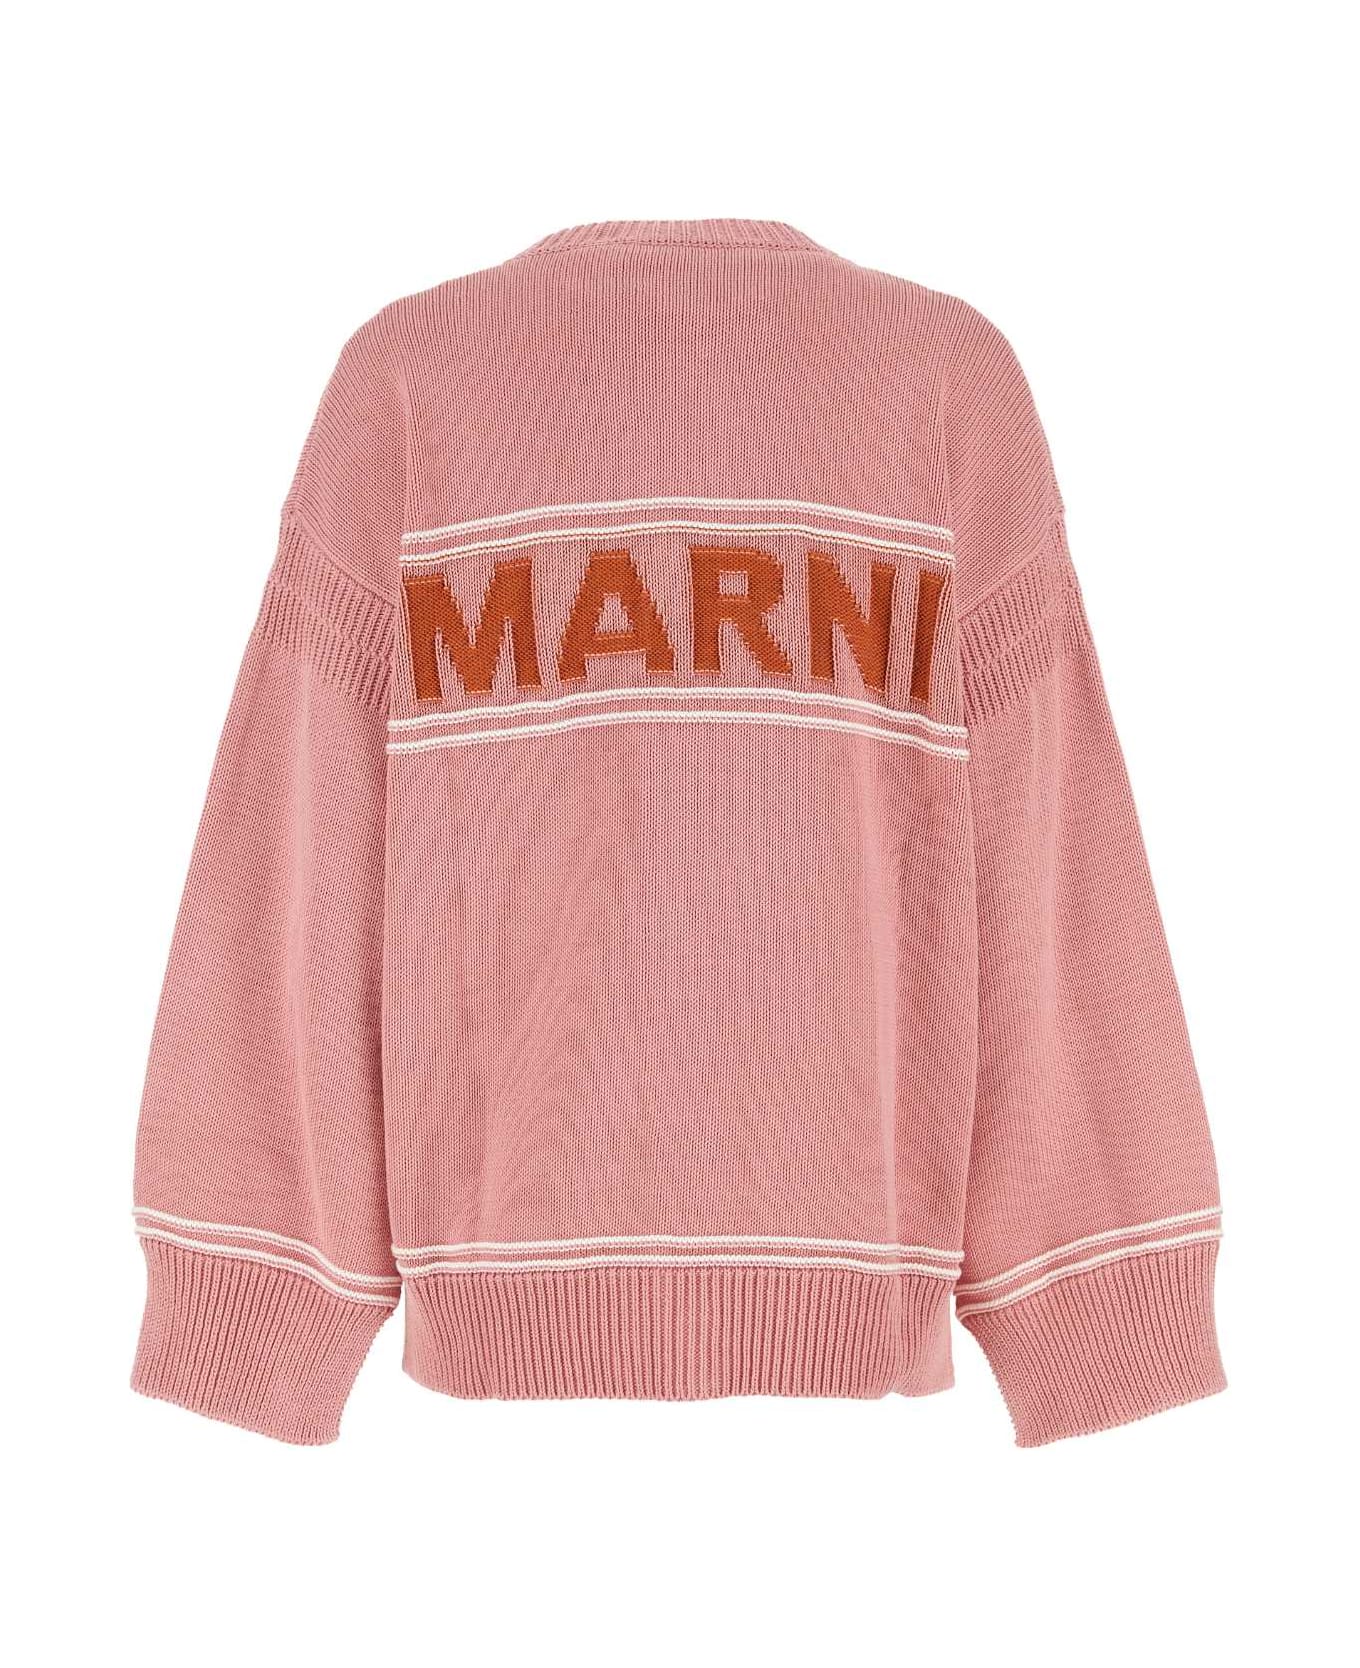 Marni Pink Cotton Cardigan - PINKGUMMY カーディガン